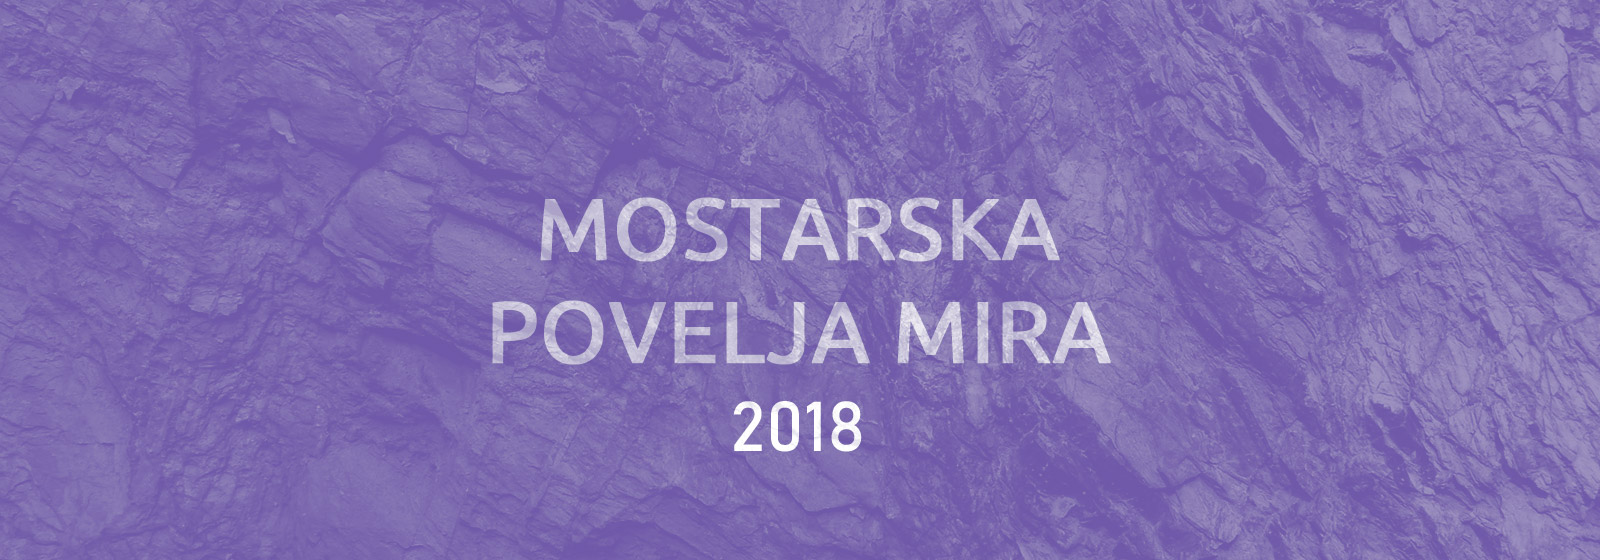 Mostarska povelja mira 2018: potpisnici Alexis Tsipras i Duško Marković